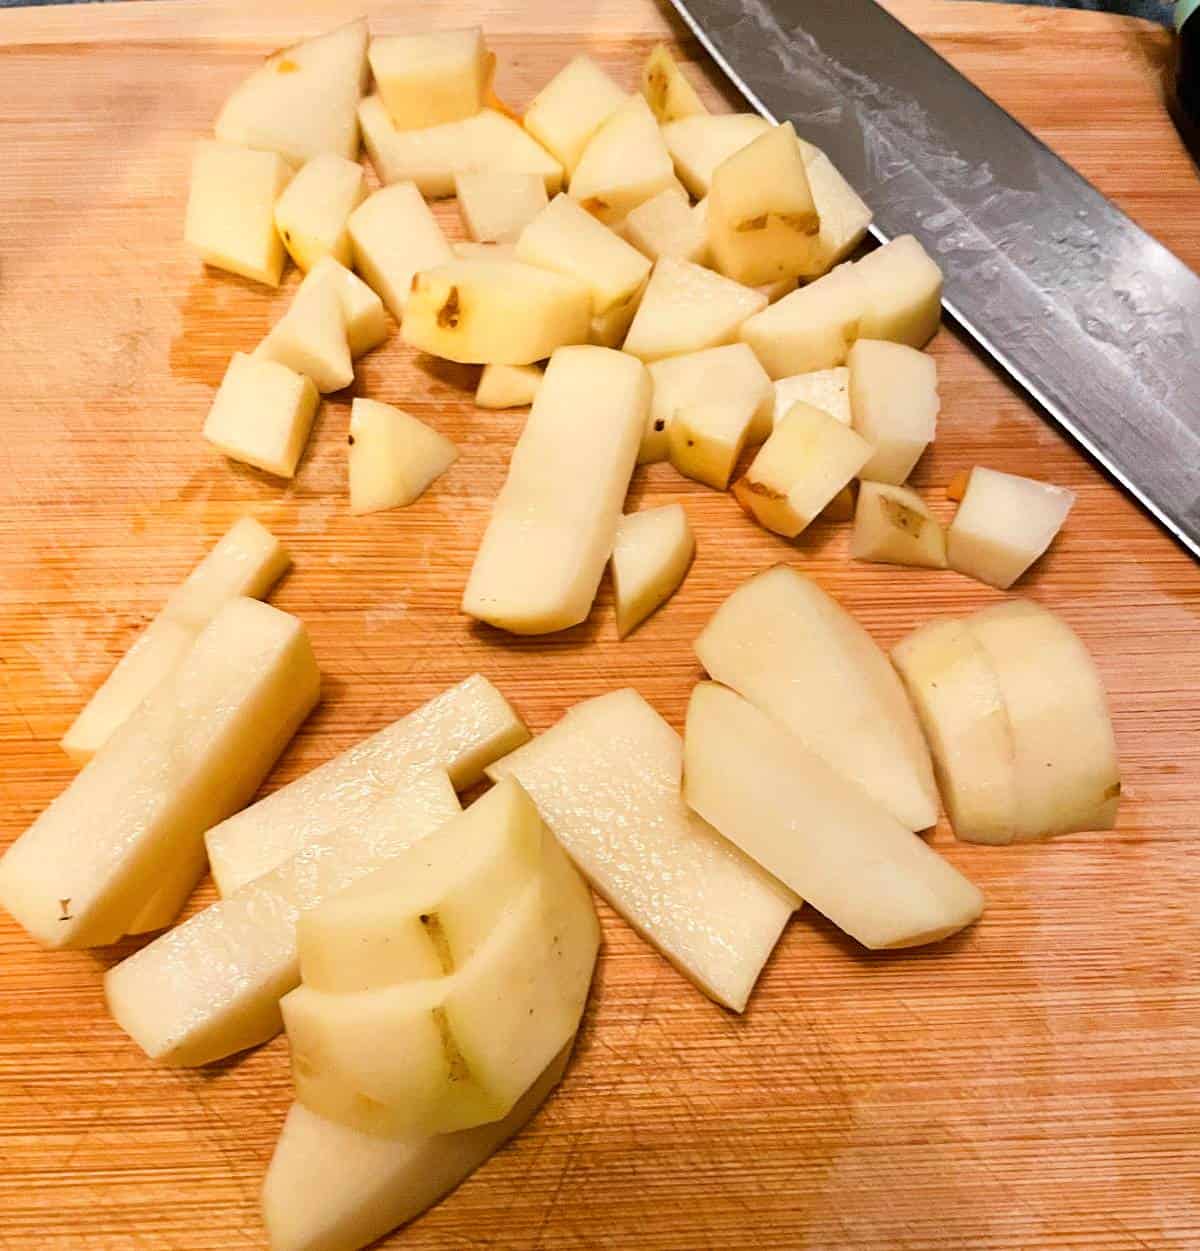 chopping potatoes on a cutting board.